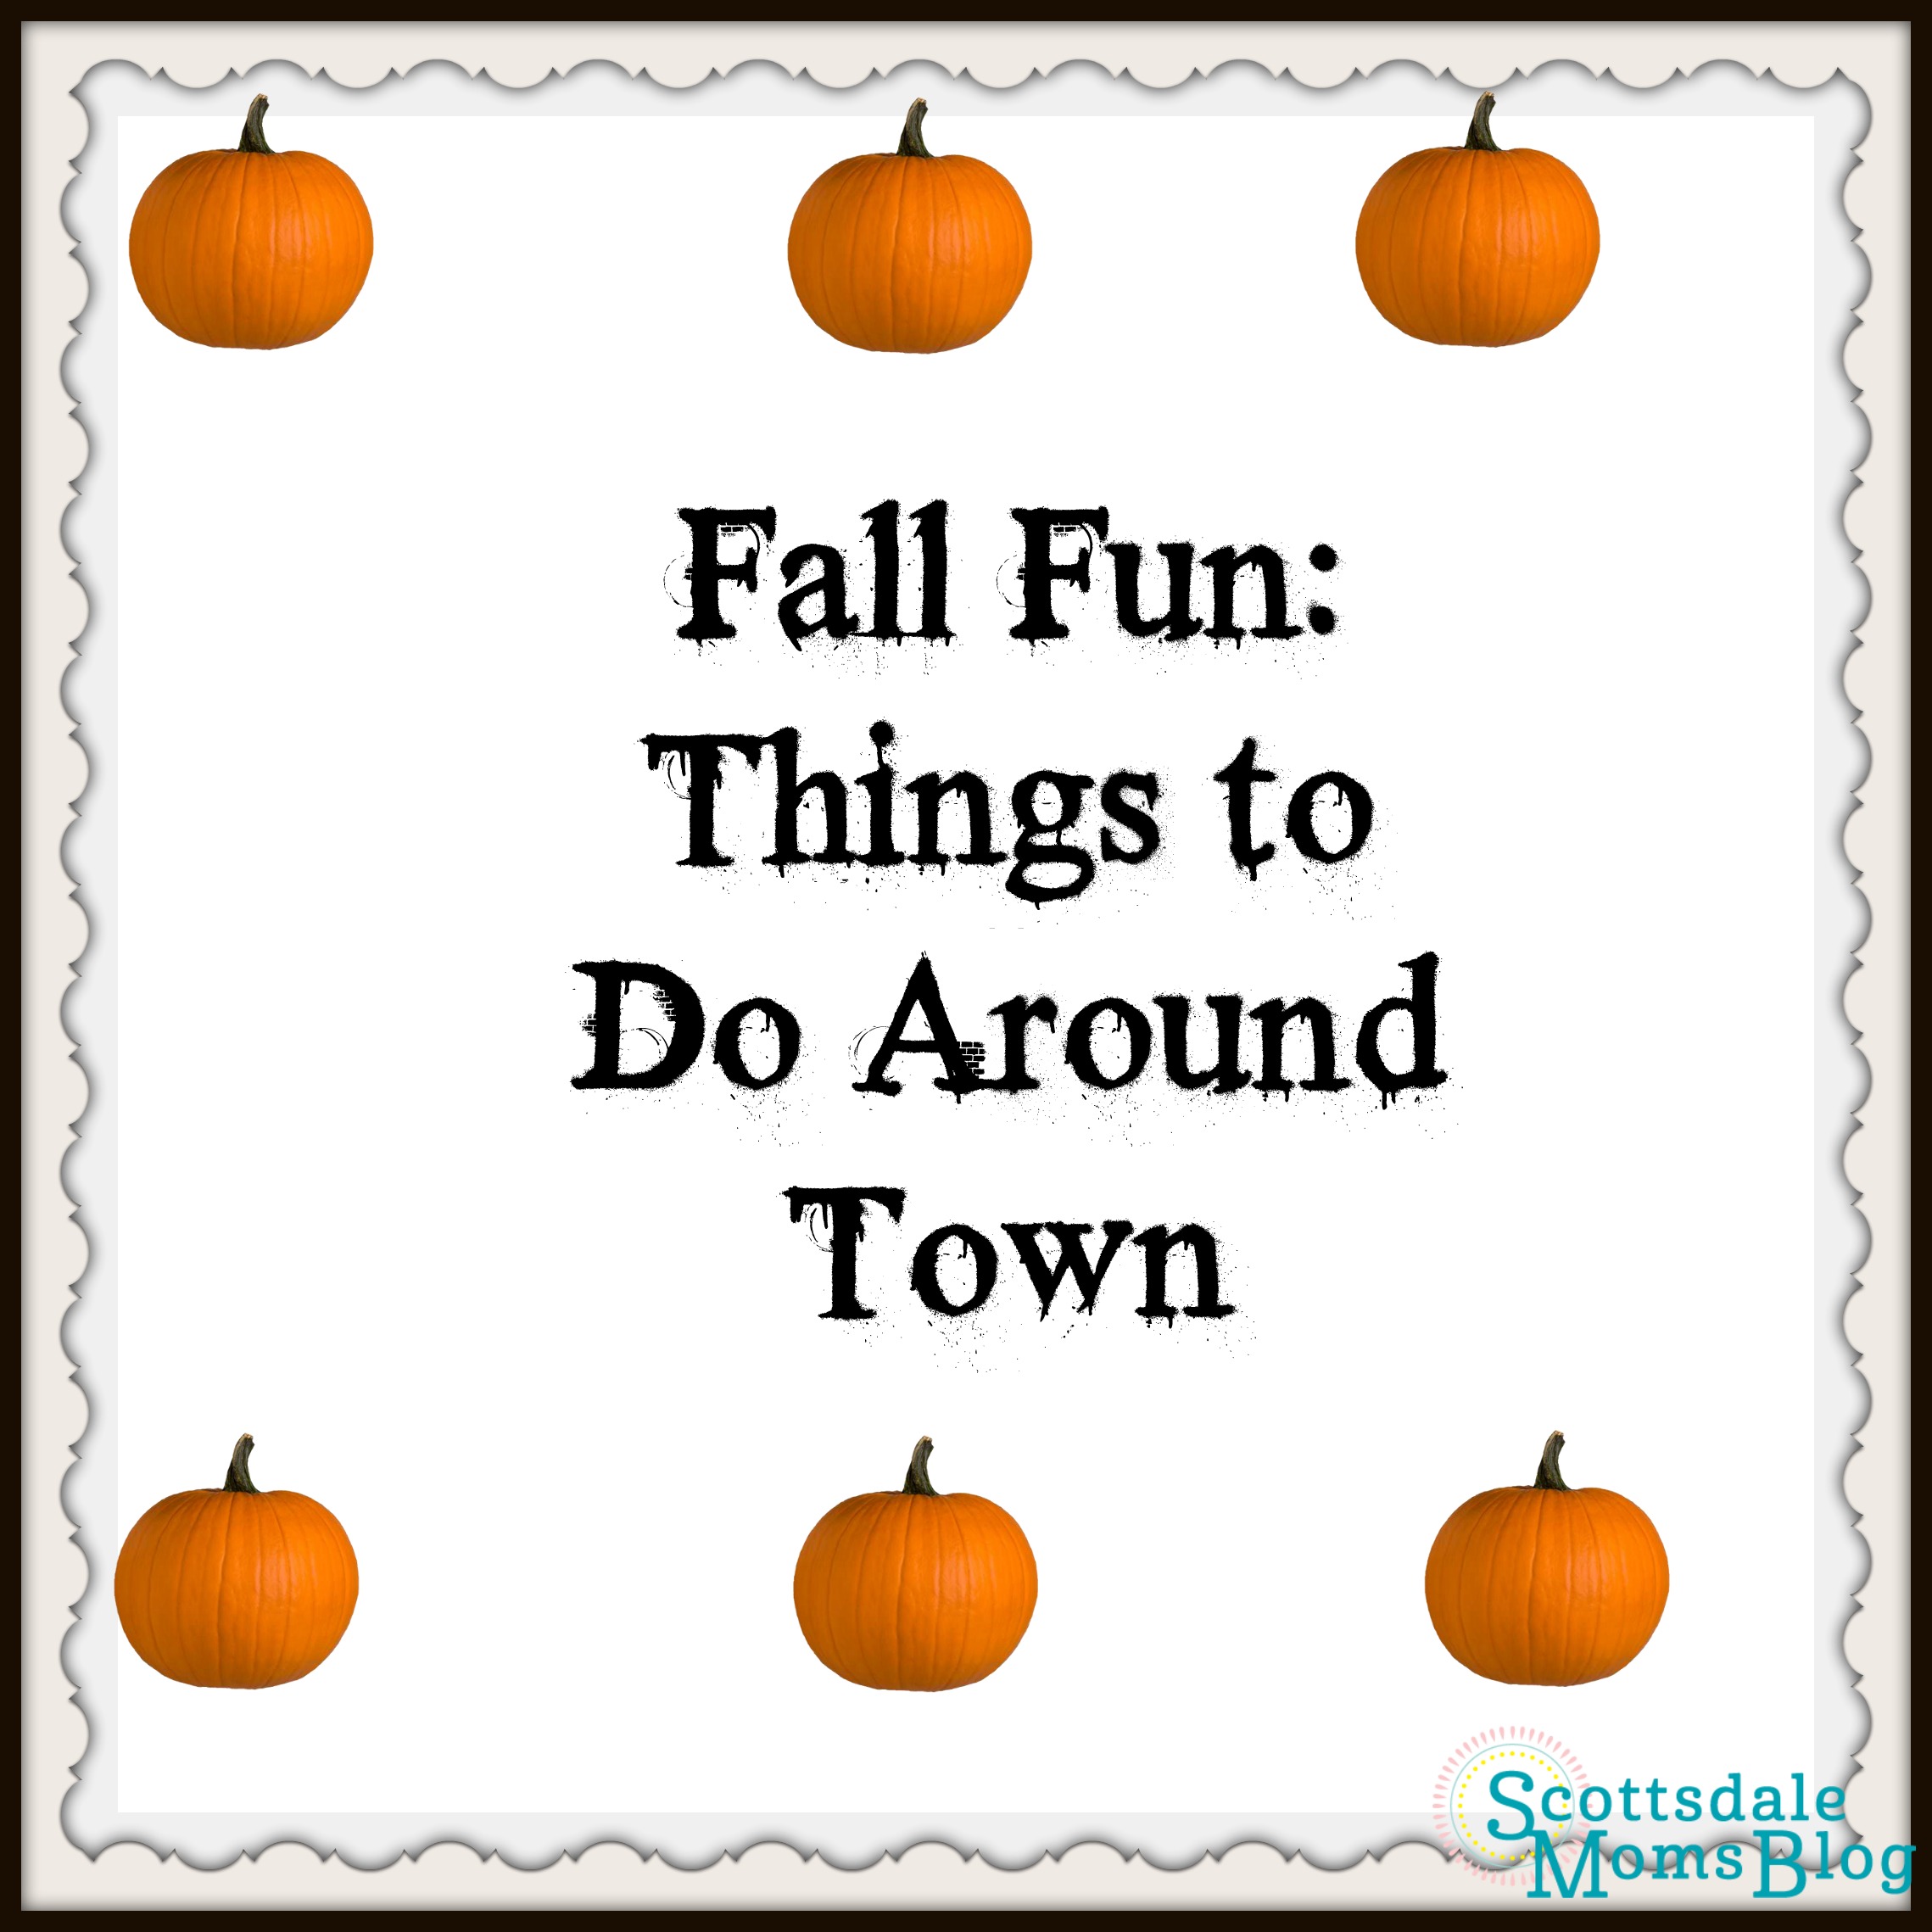 Fall Fun: Things to Do Around Town